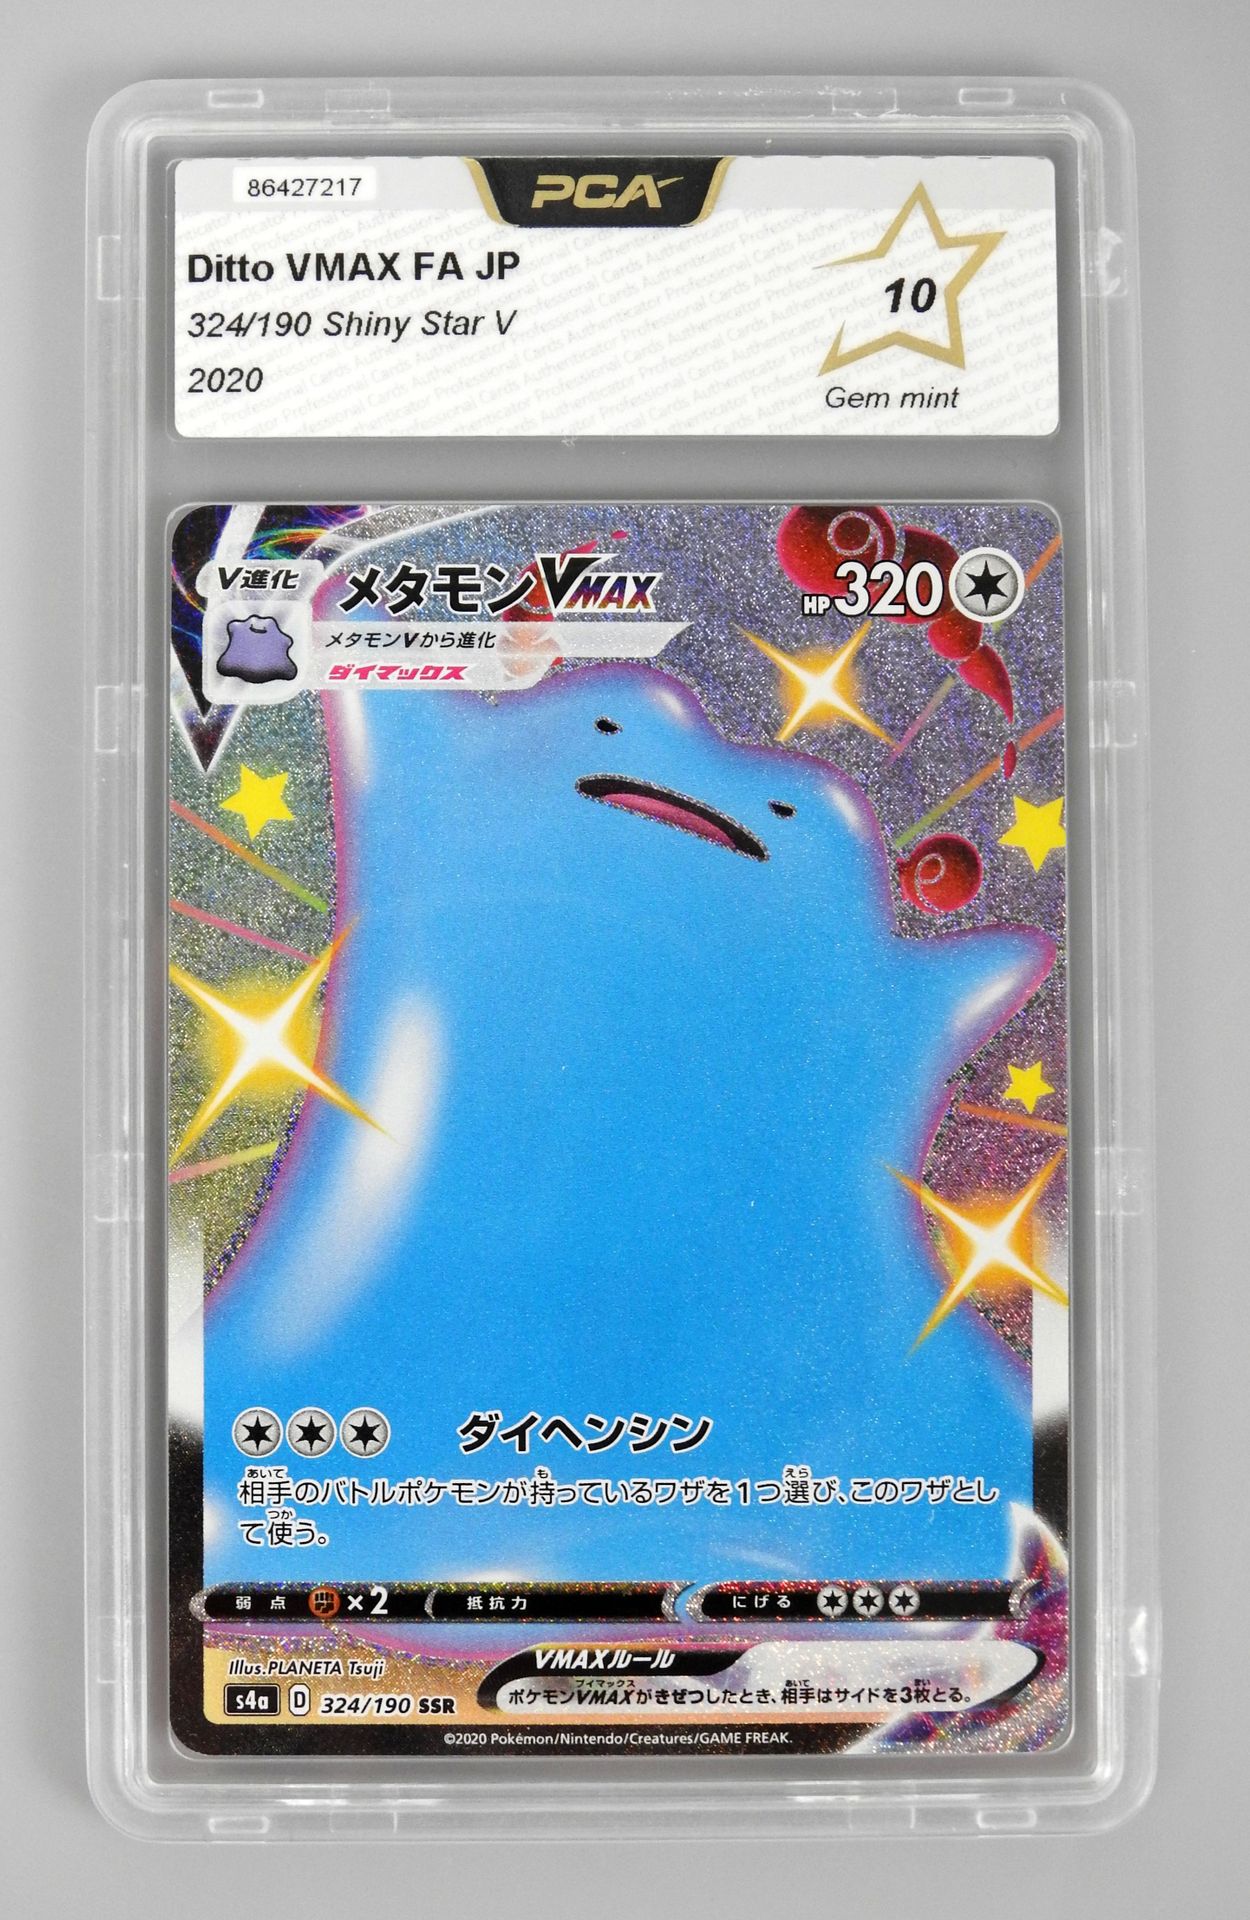 Null DITTO V MAX arte completa

Shiny Star V 324/190 JAP

Scheda Pokémon voto PC&hellip;